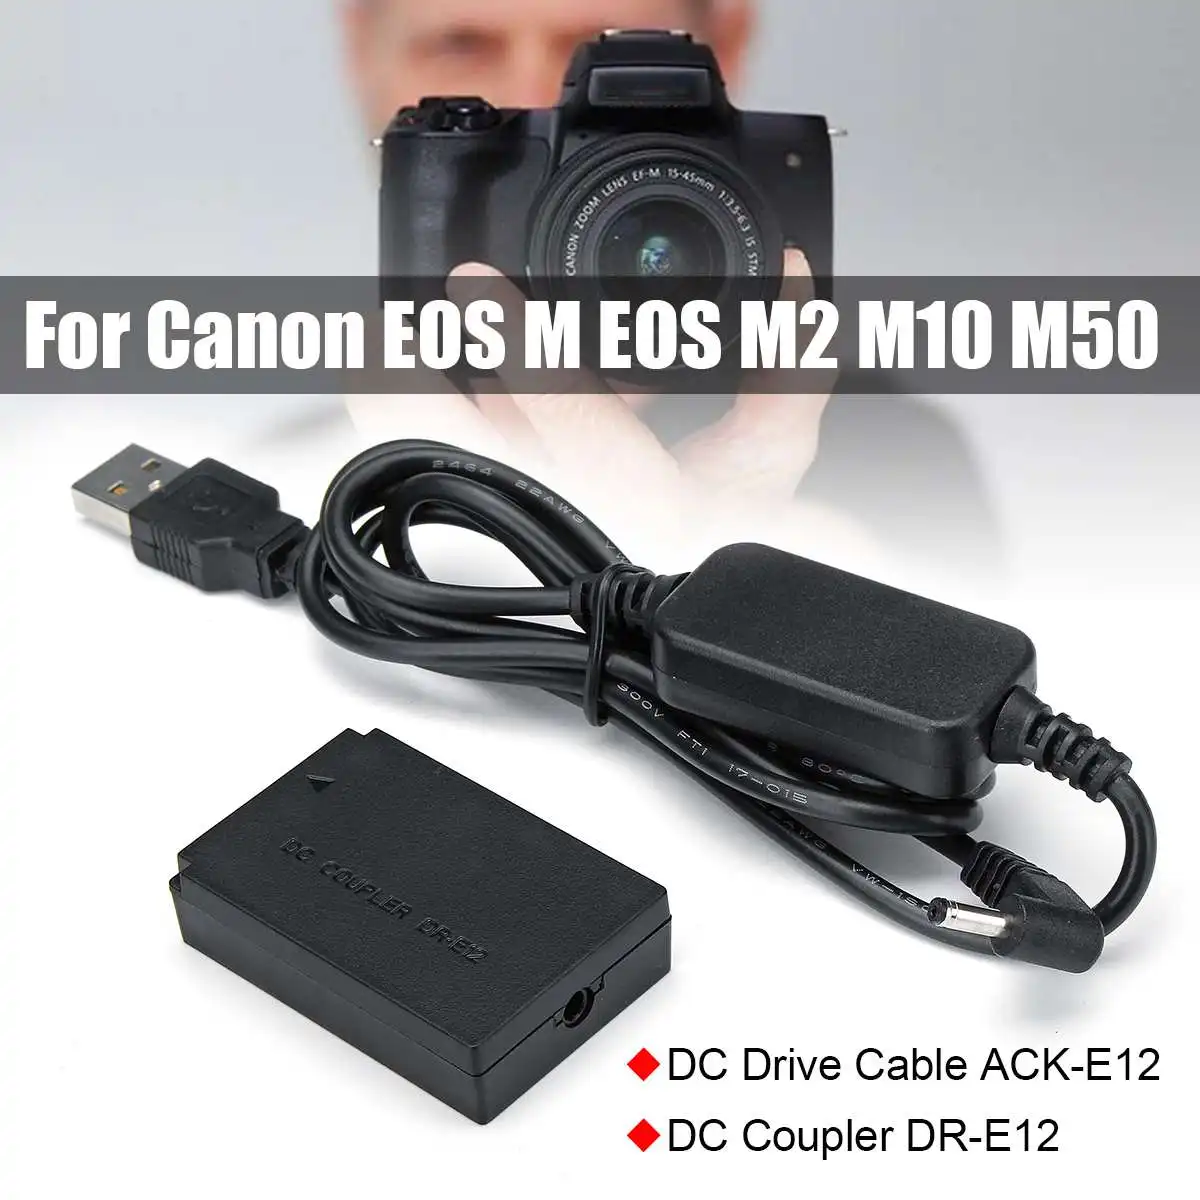 5 V кабель USB 8,4 в постоянного тока ACK-E12 Mobile power bank + DR-E12 Переходник постоянного тока LP-E12 манекен Аккумулятор для Canon EOS M EOS M2 M10 M50 камеры